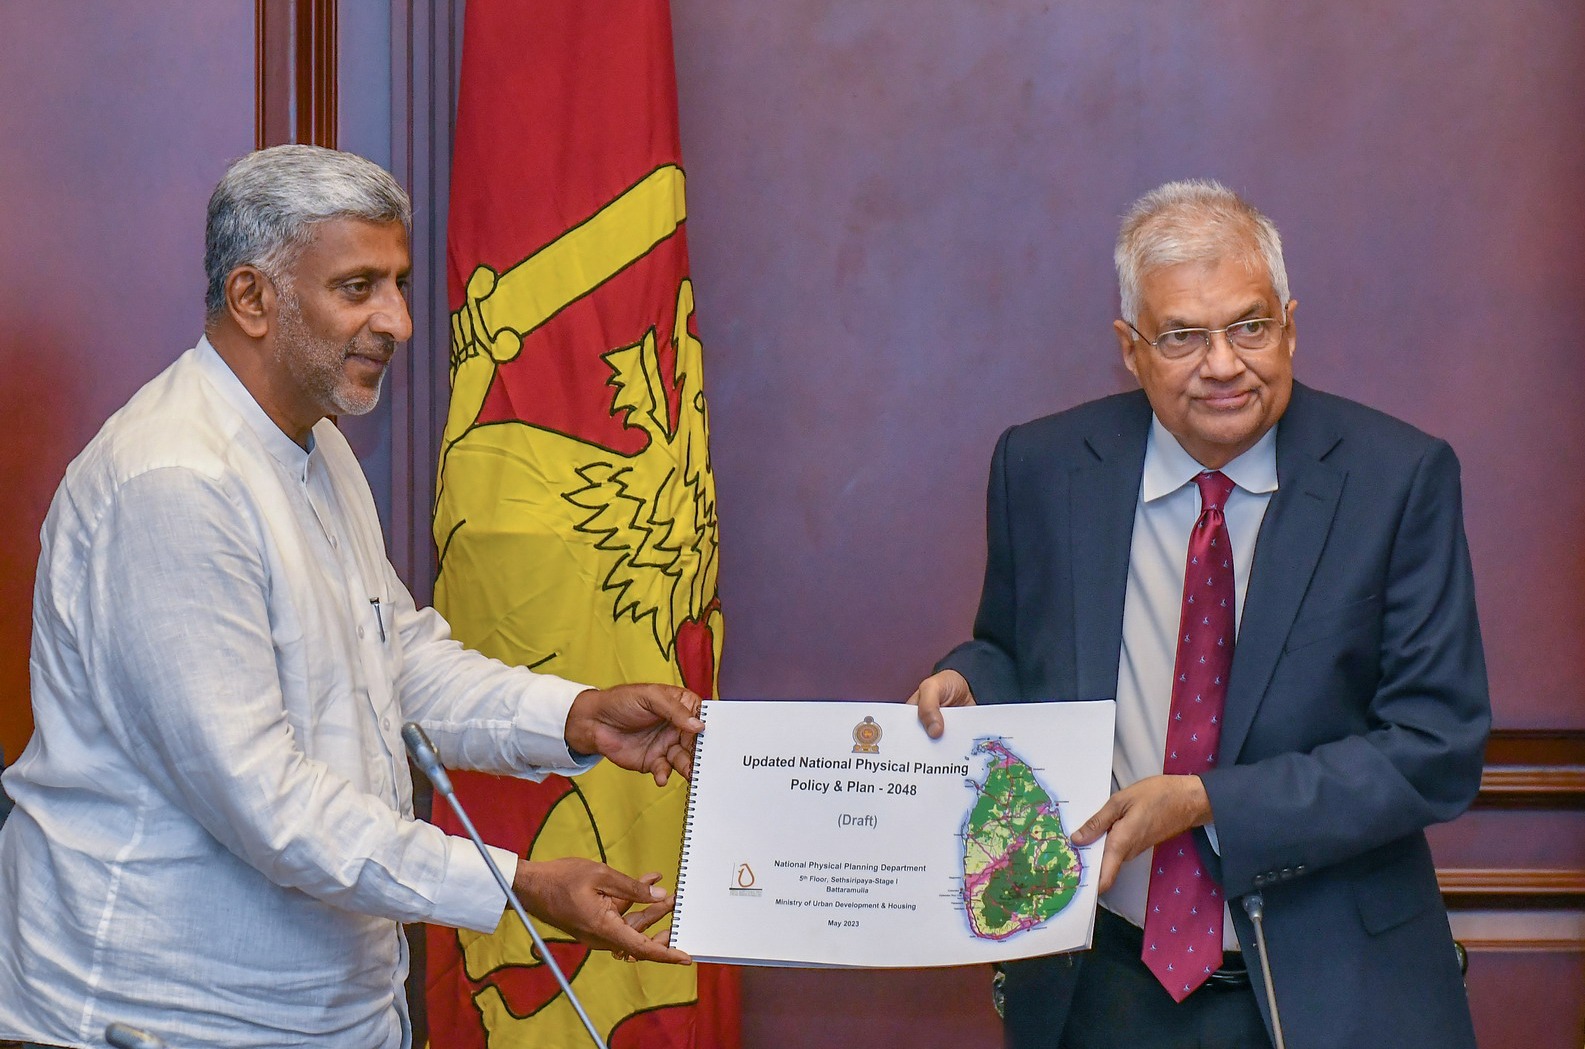 President Receives ‘National Physical Planning Policy Draft – 2048’ as Sri Lanka’s Urban Development Gains Momentum